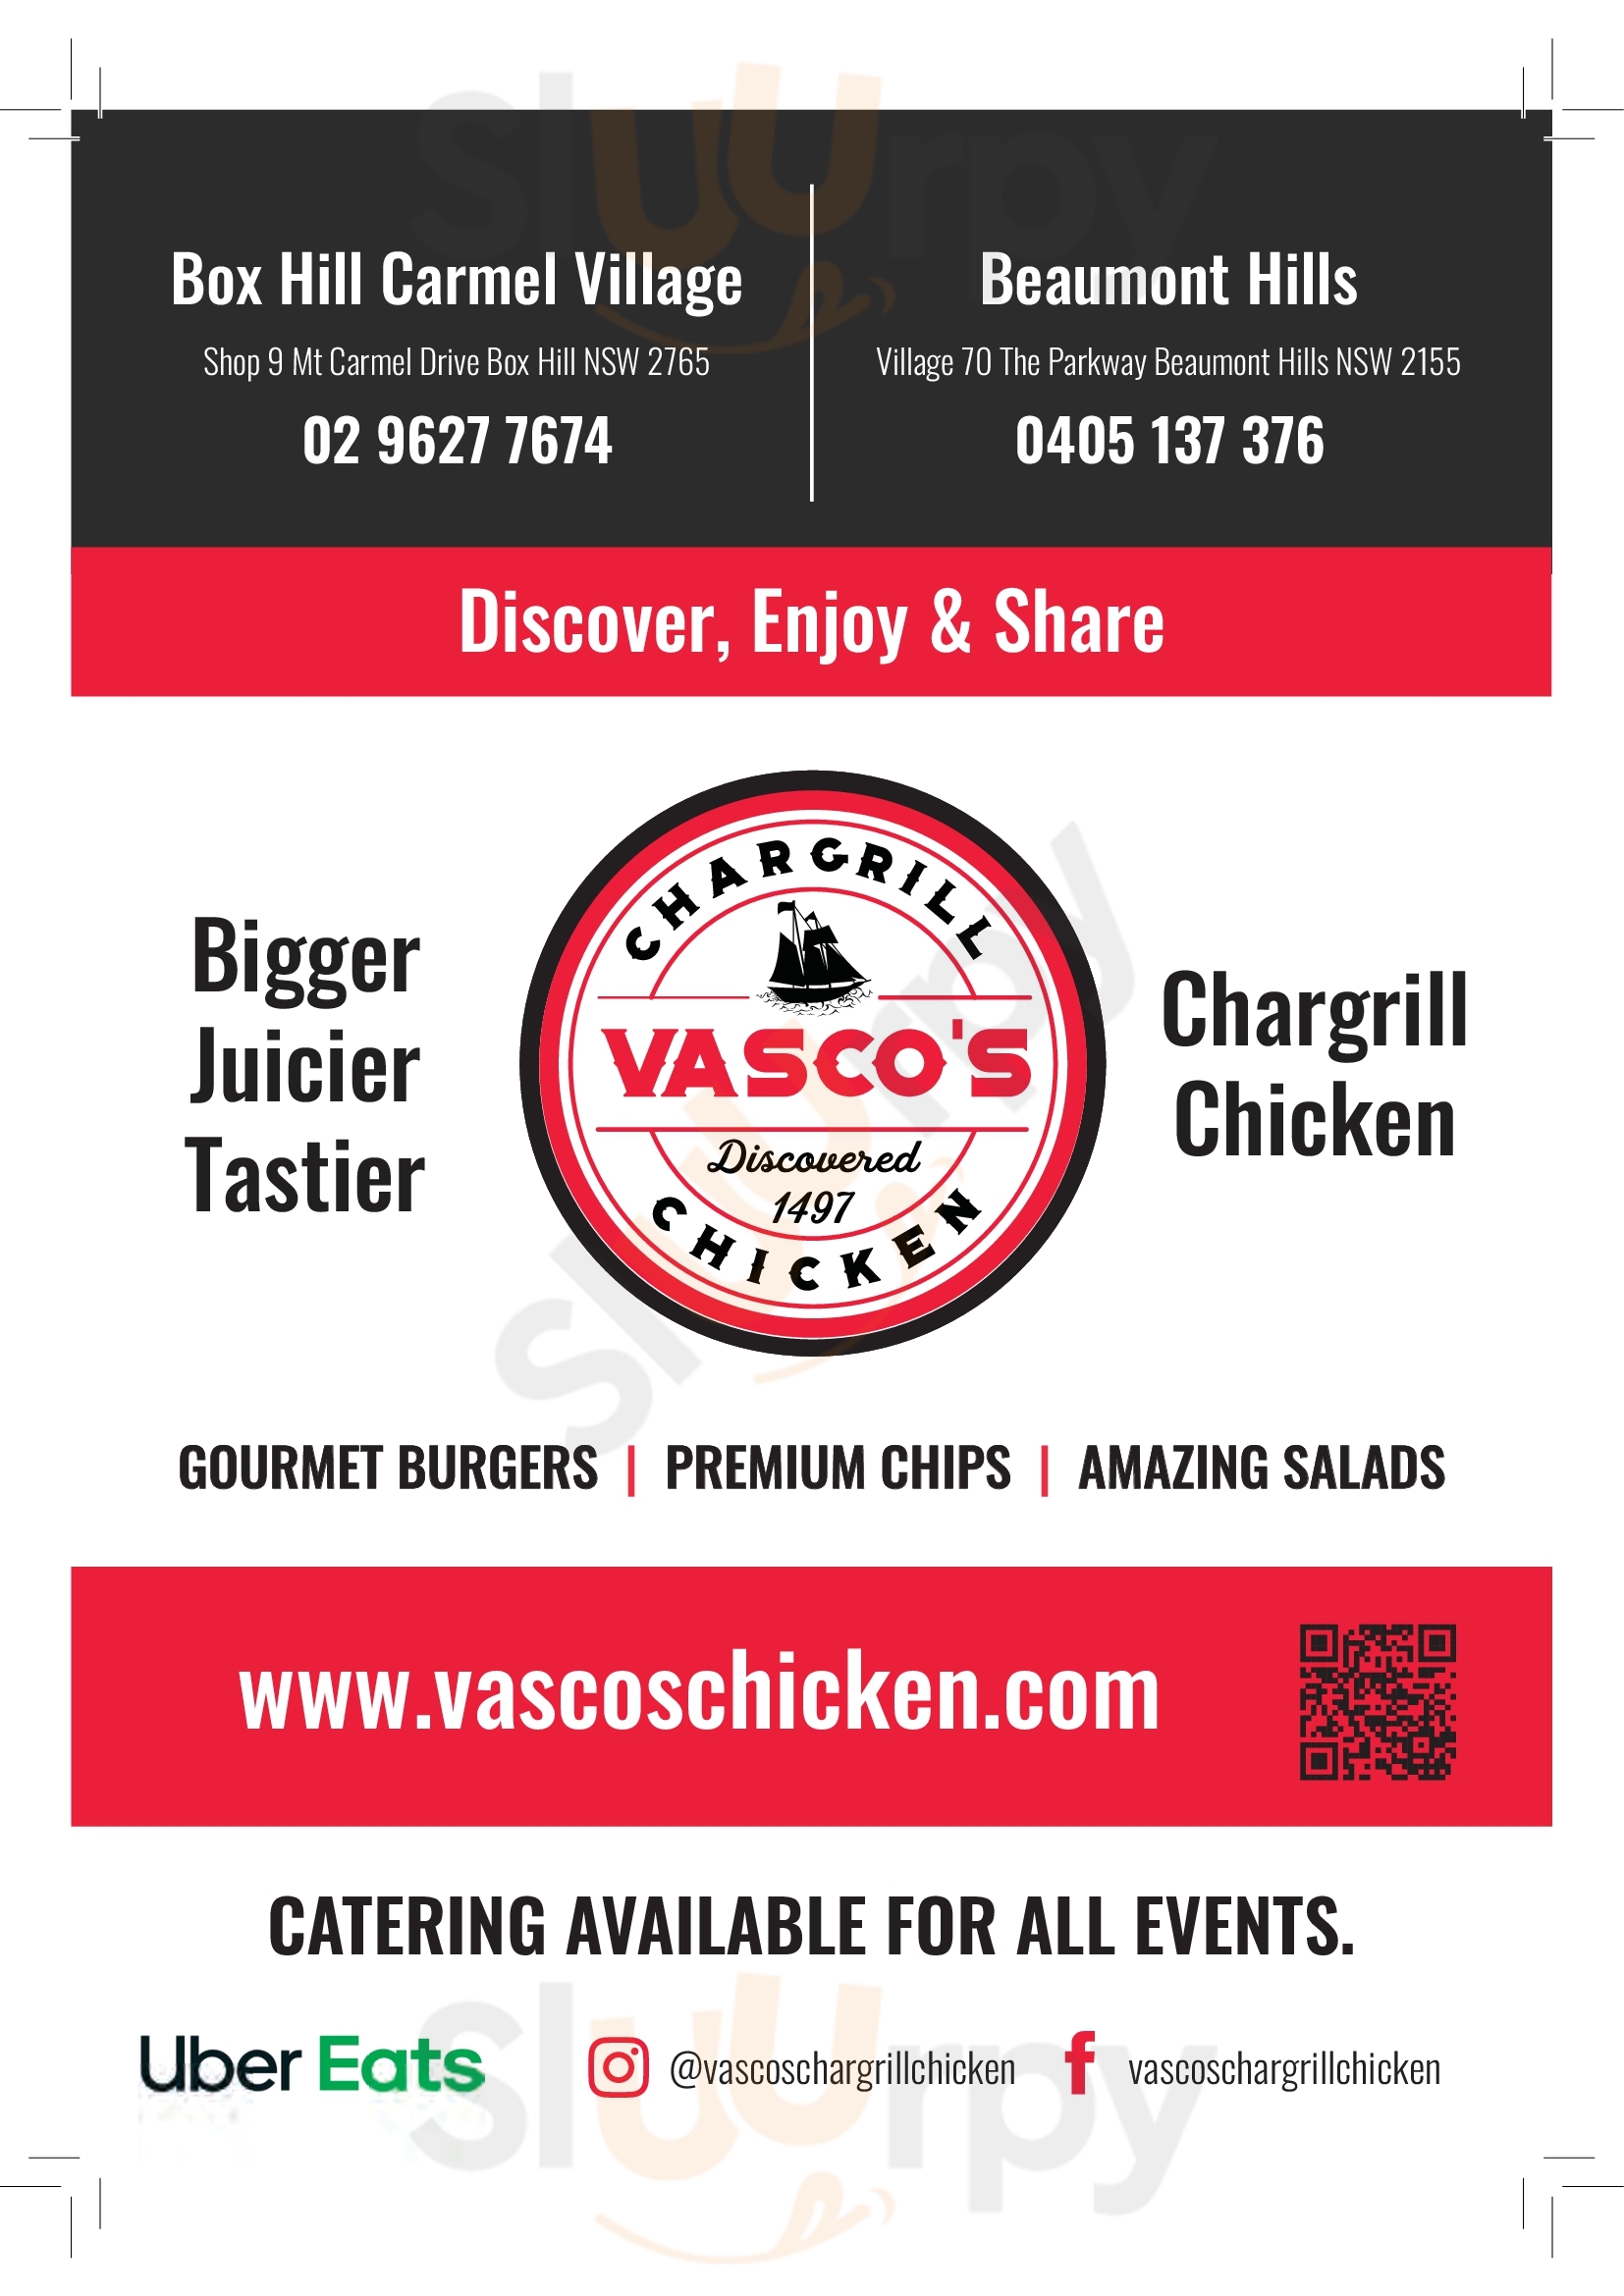 Vasco's Chargrill Chicken Parramatta Menu - 1